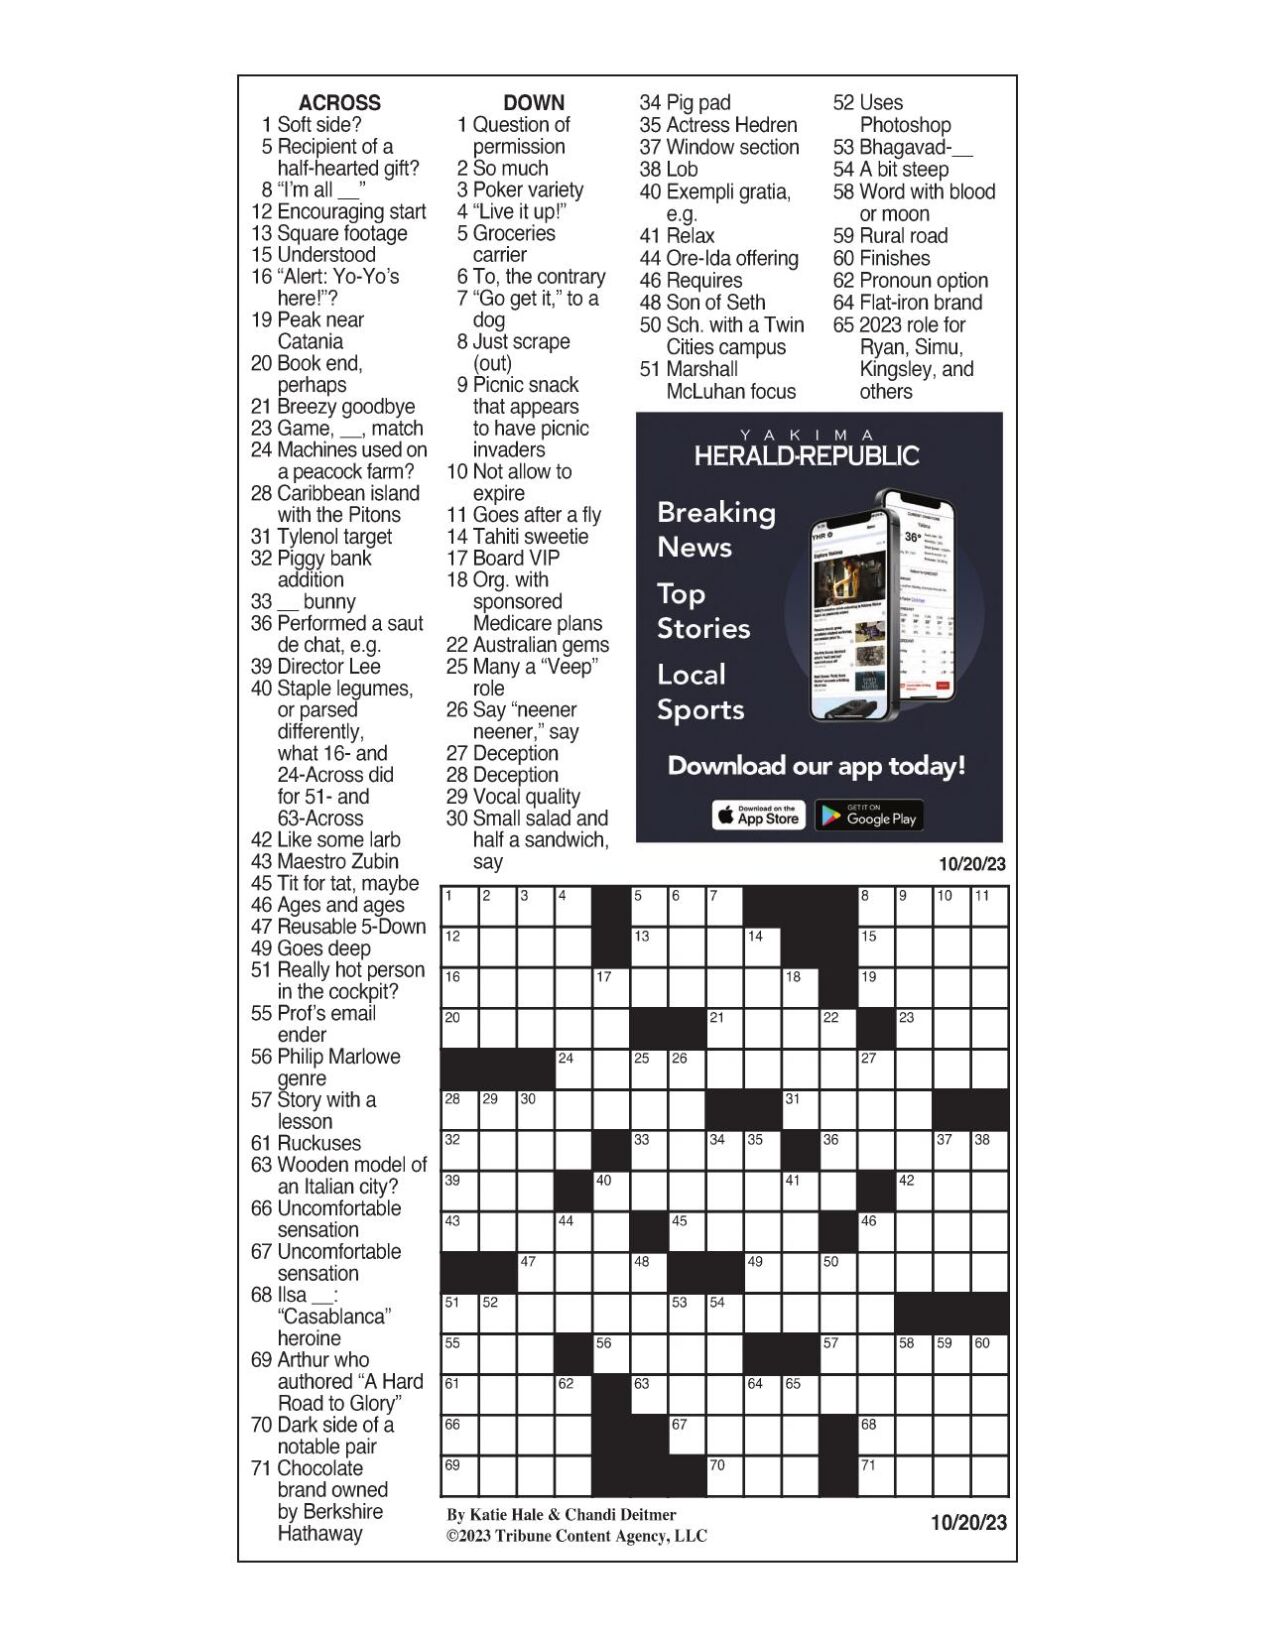 LA Times Crossword 25 Oct 22, Tuesday 